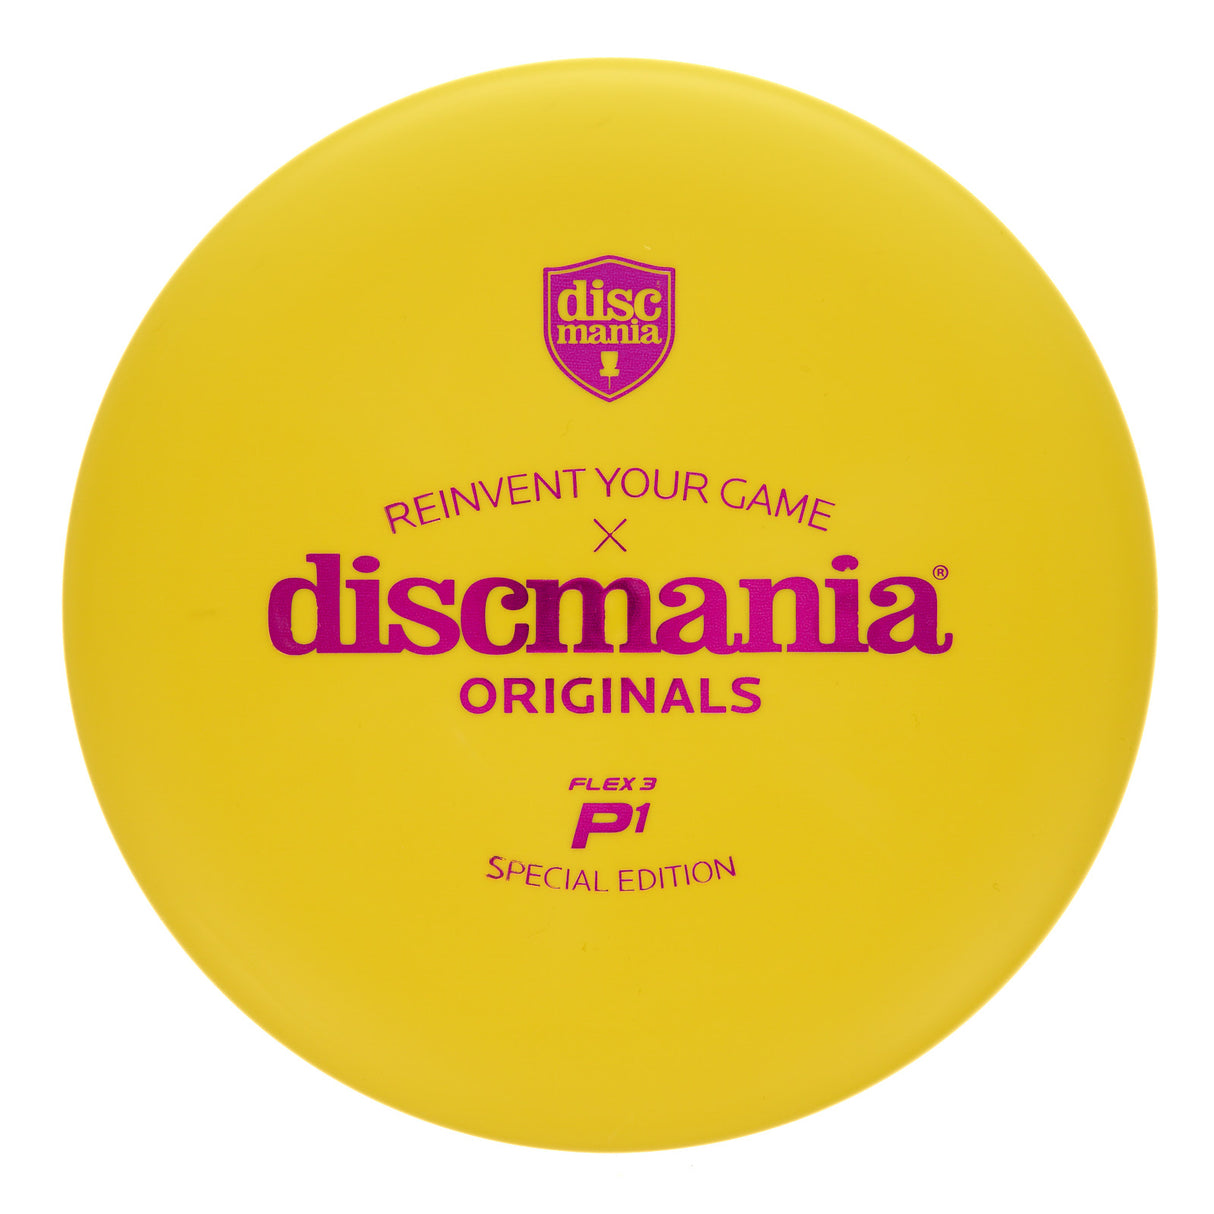 Discmania P1 - Special Edition D-Line Flex 3 174g | Style 0004